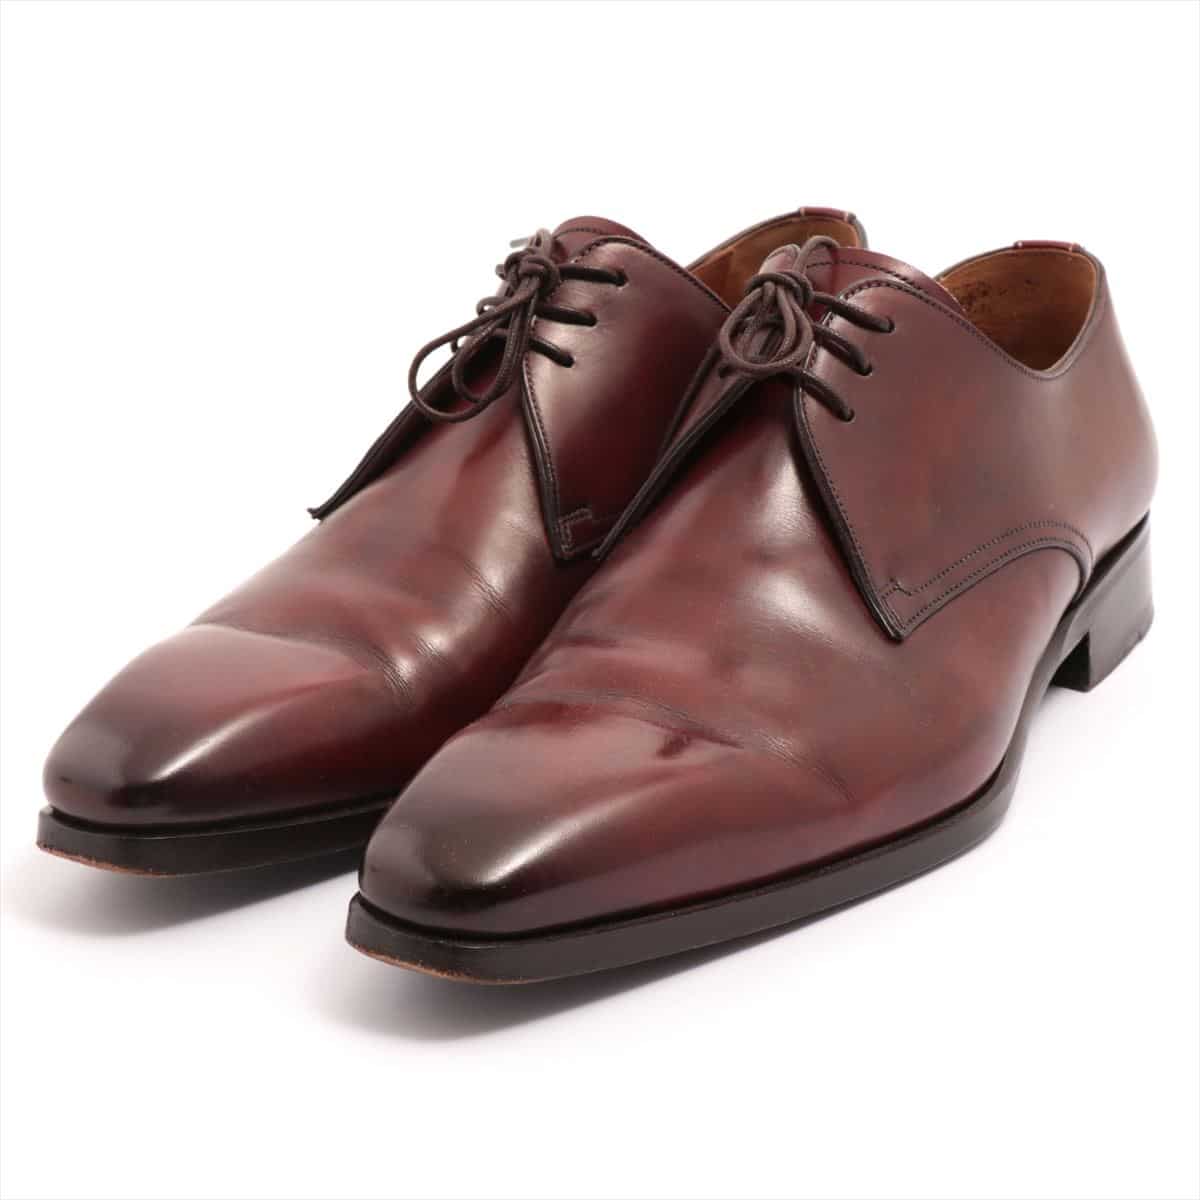 Santoni Leather Leather shoes 6 Men's Brown 7645